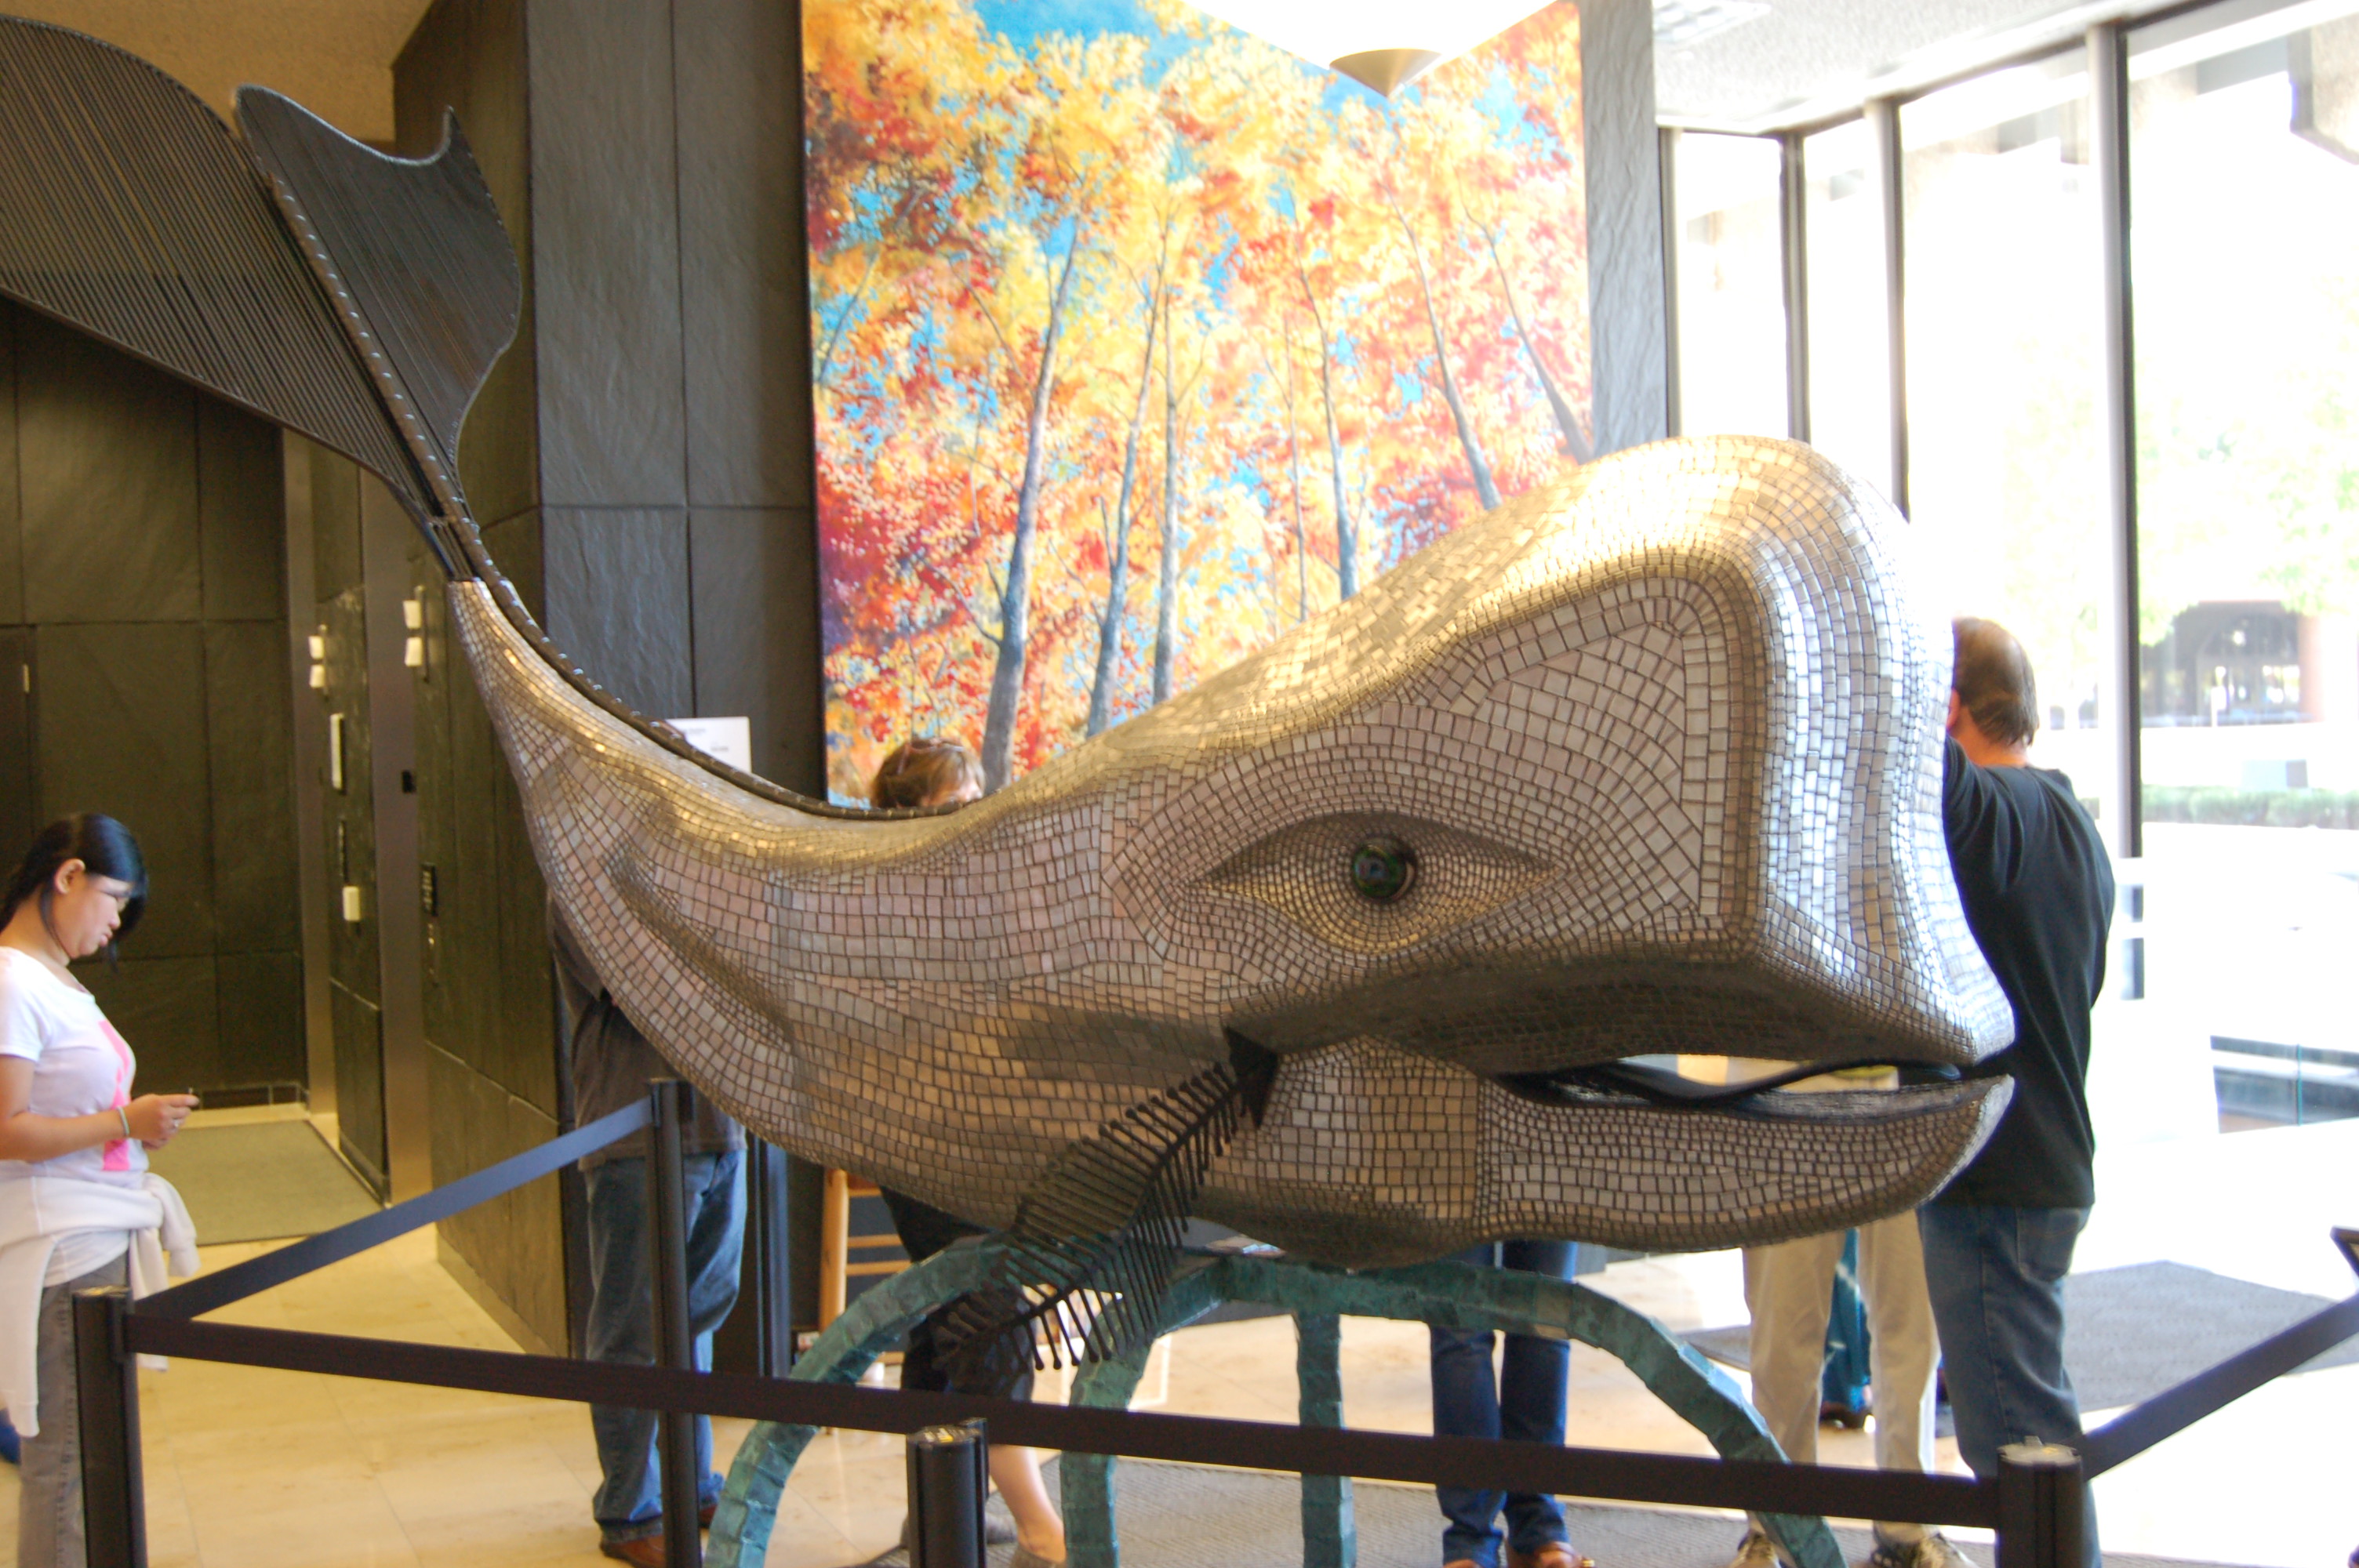 ArtPrize 2014 Mosaic Whale